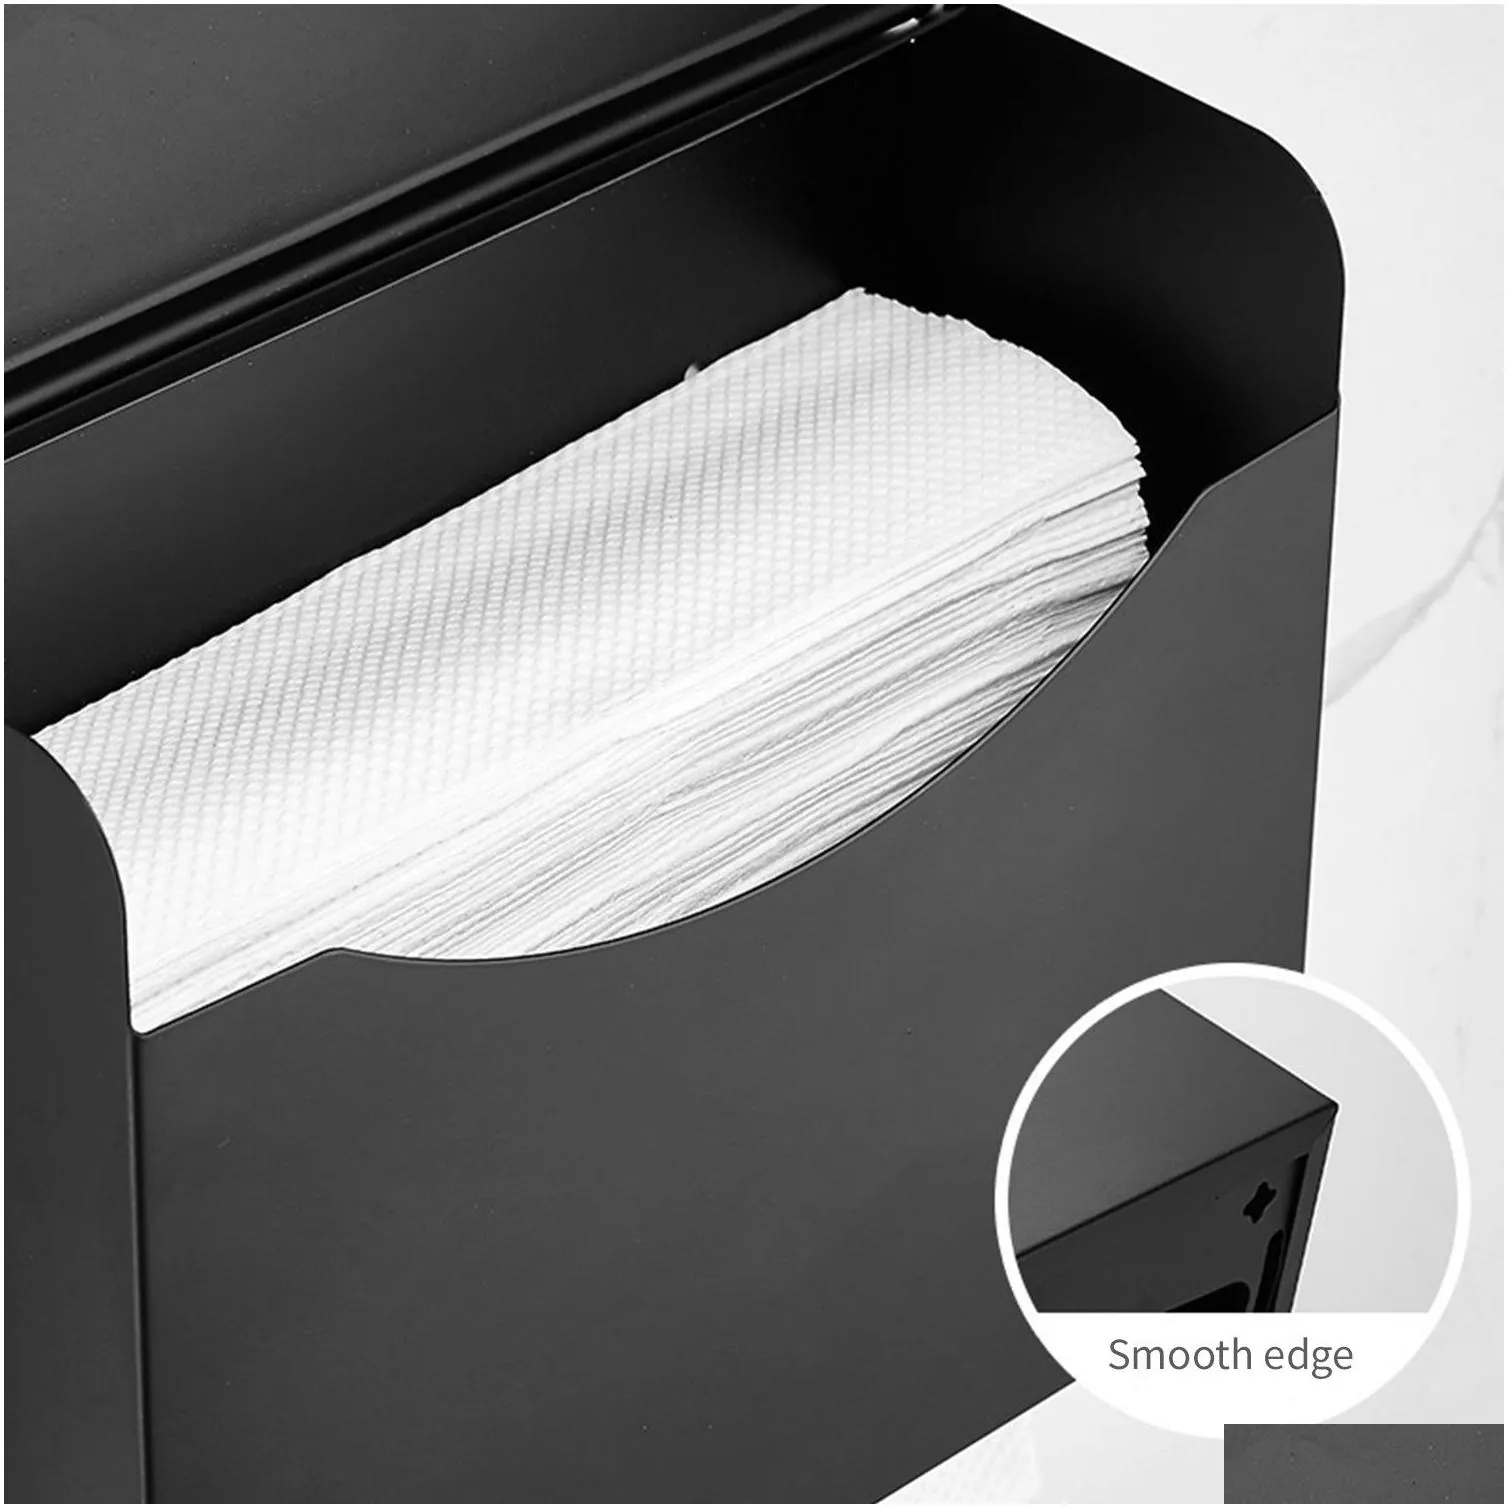 Paper Towel Holders Wall-Mounted Paper Towel Dispenser Dual Dispensing Holder Waterproof Space Aluminum Bathroom Tissue Box 210320 Dro Dhxa5